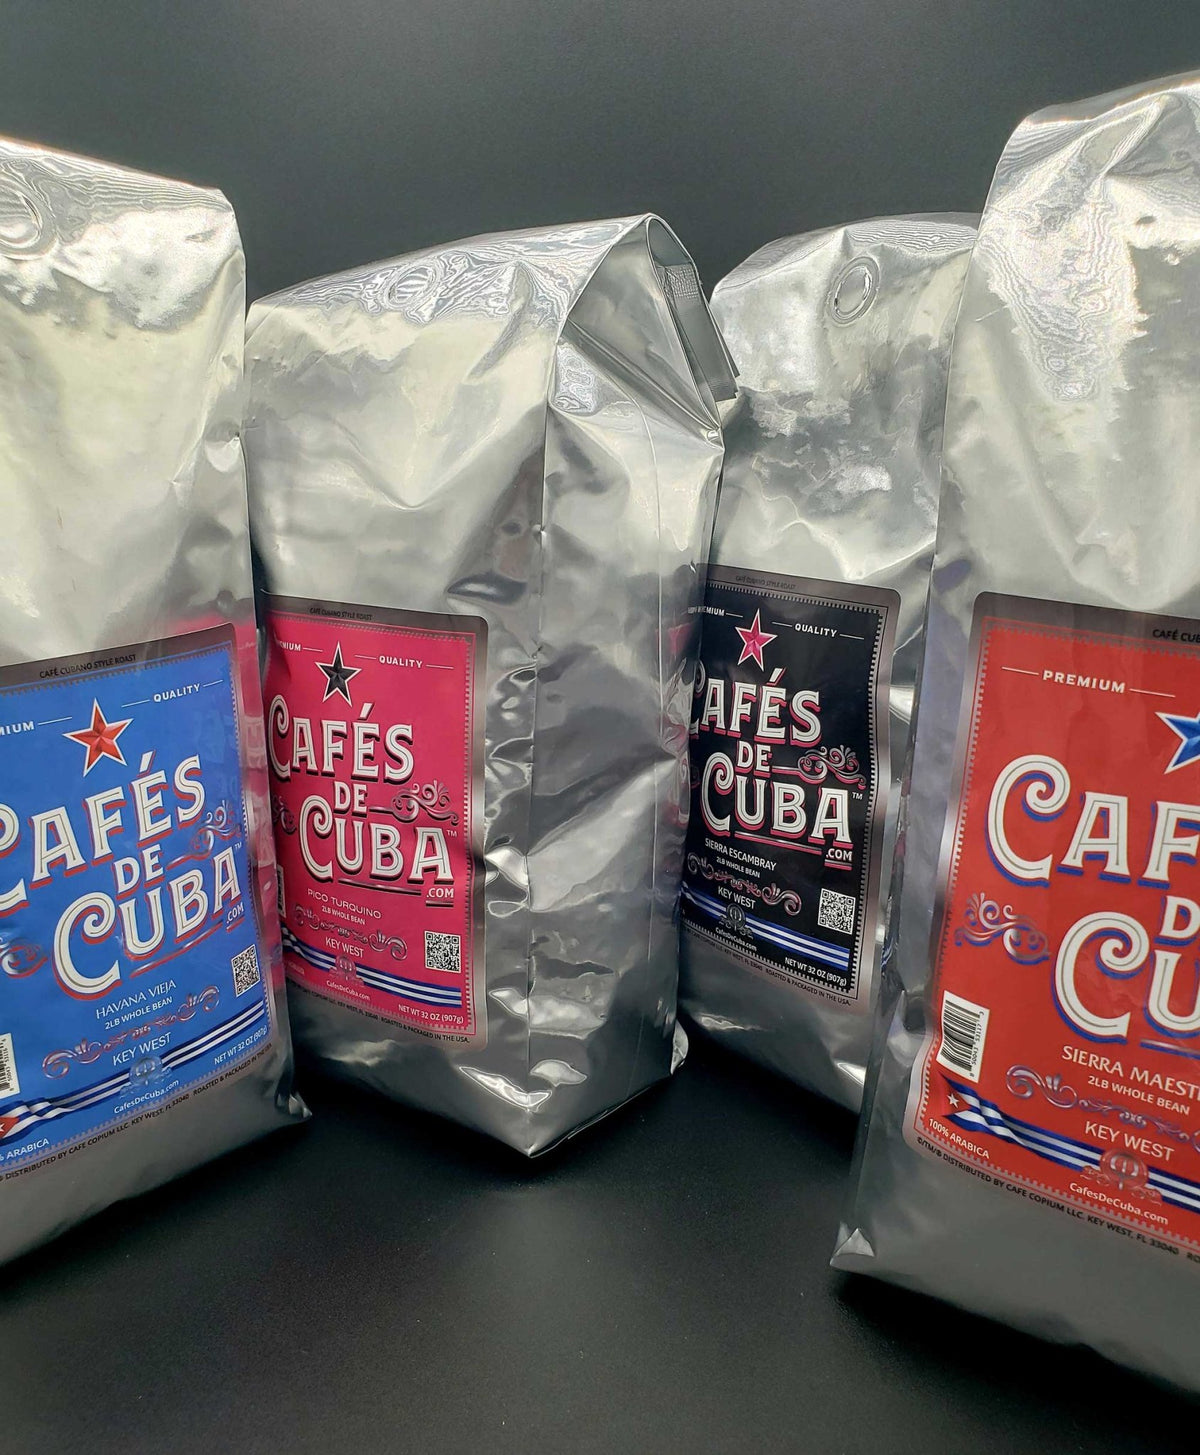 SIERRA MAESTRA - 100% Arabica - Intensity 12 - Cafés De Cuba